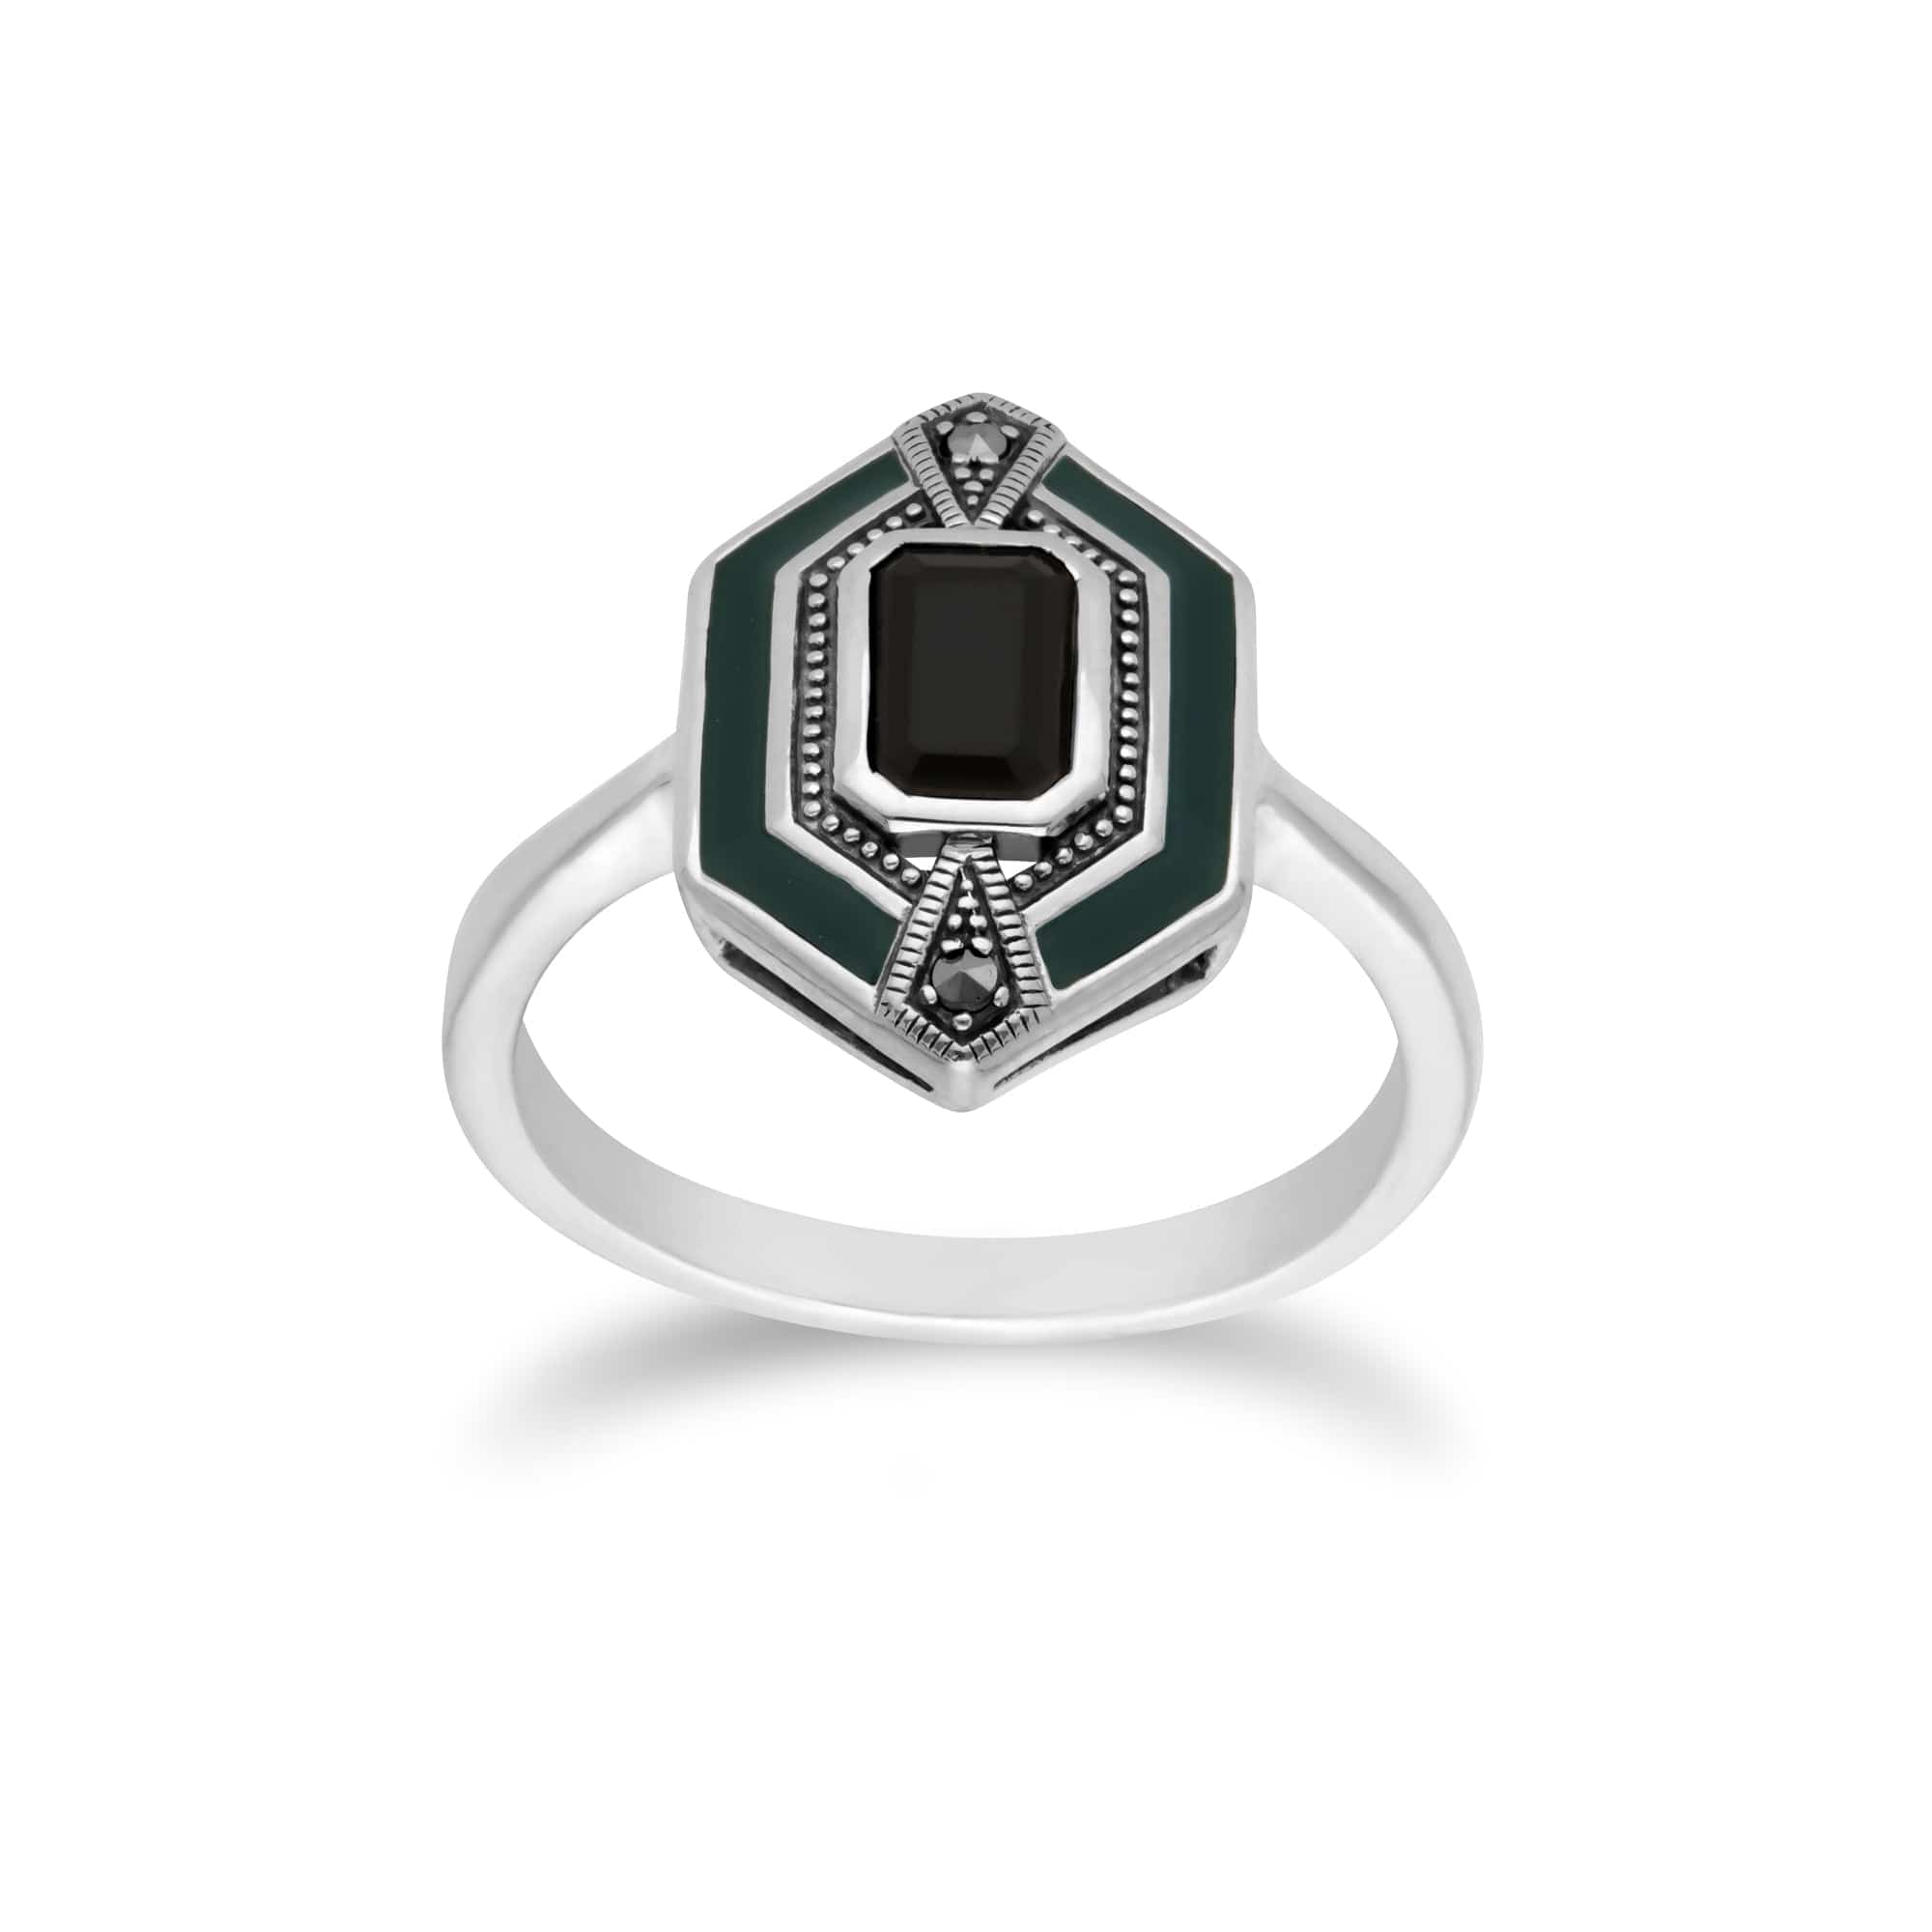 214P303401925-214R602604925 Art Deco Style Black Onyx, Marcasite & Green Enamel Hexagon Ring & Pendant Set in 925 Sterling Silver 3